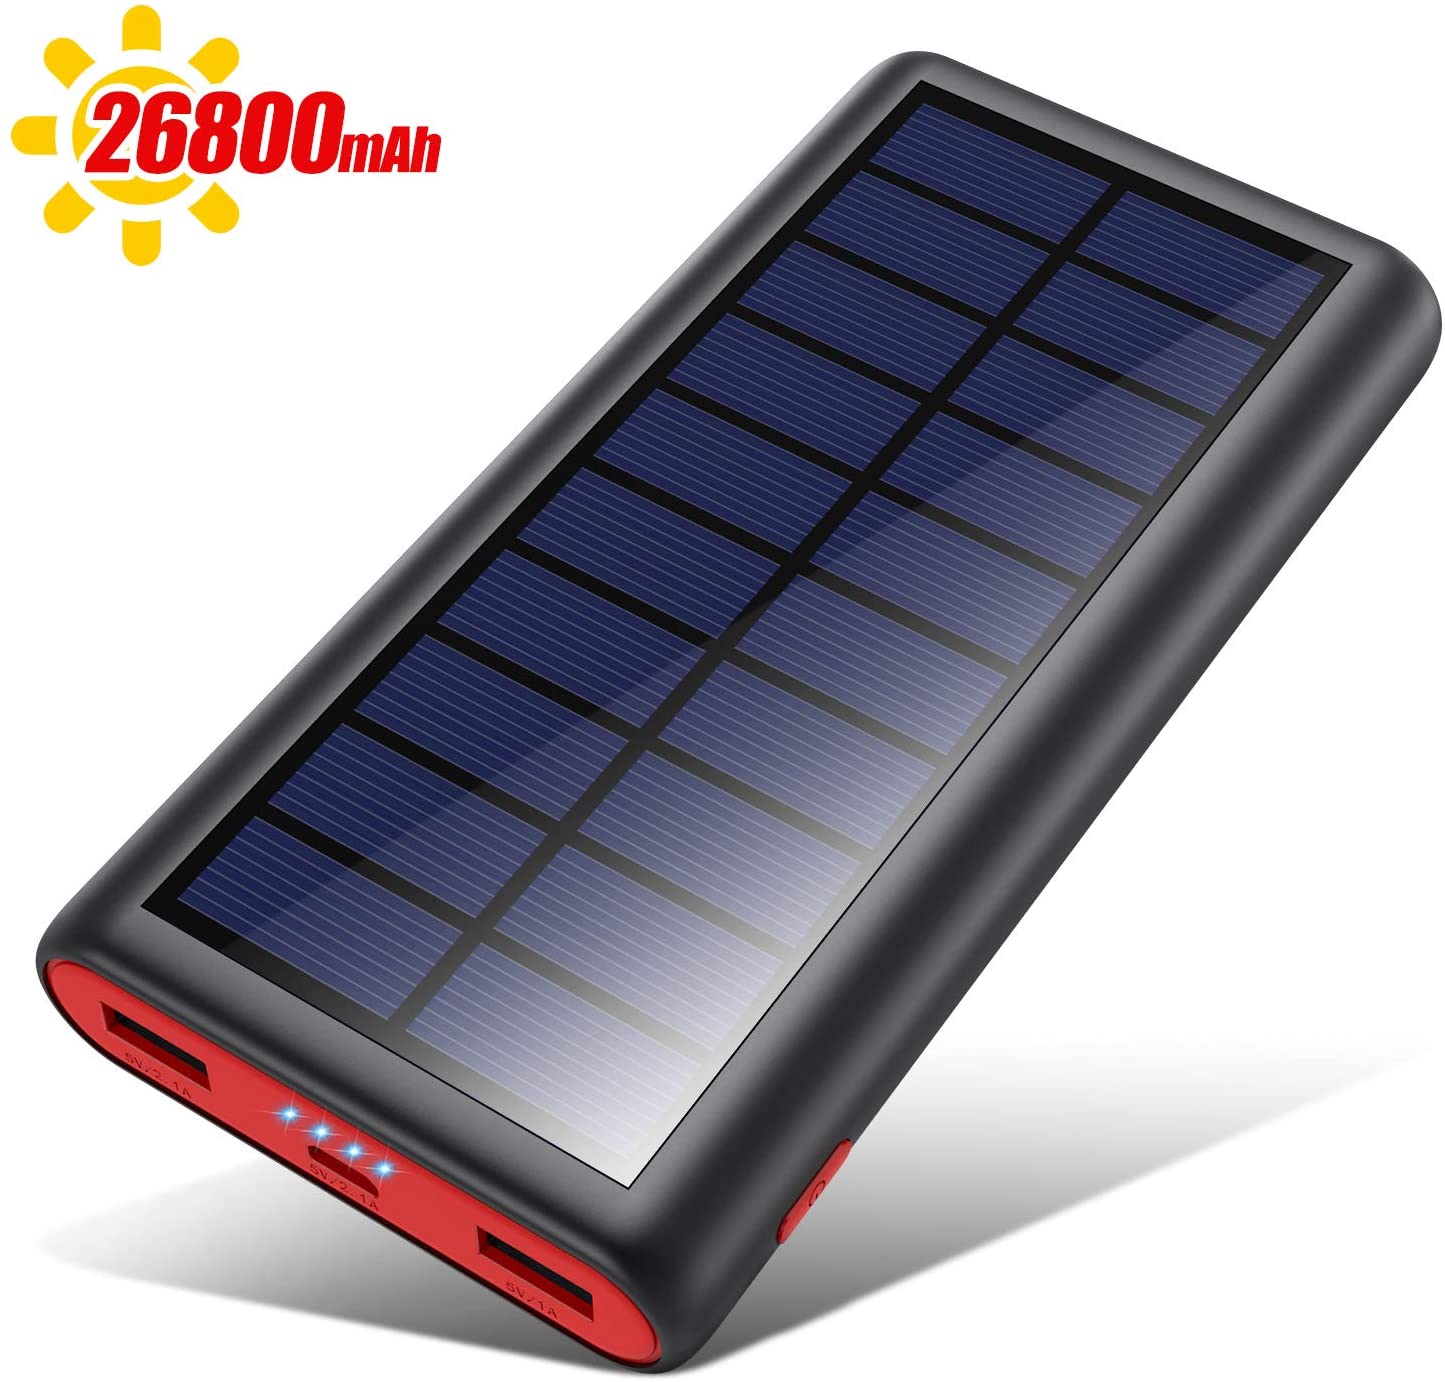 VOOE Powerbank Solare 26800mAh, 【2020 Chip Intelligente】 Caricabatterie Solare Portatile Caricatore Solare Impermeabile Batteria Esterna 2 Porte 3.1A Ricarica Rapida per Cellulare iPad Tablets